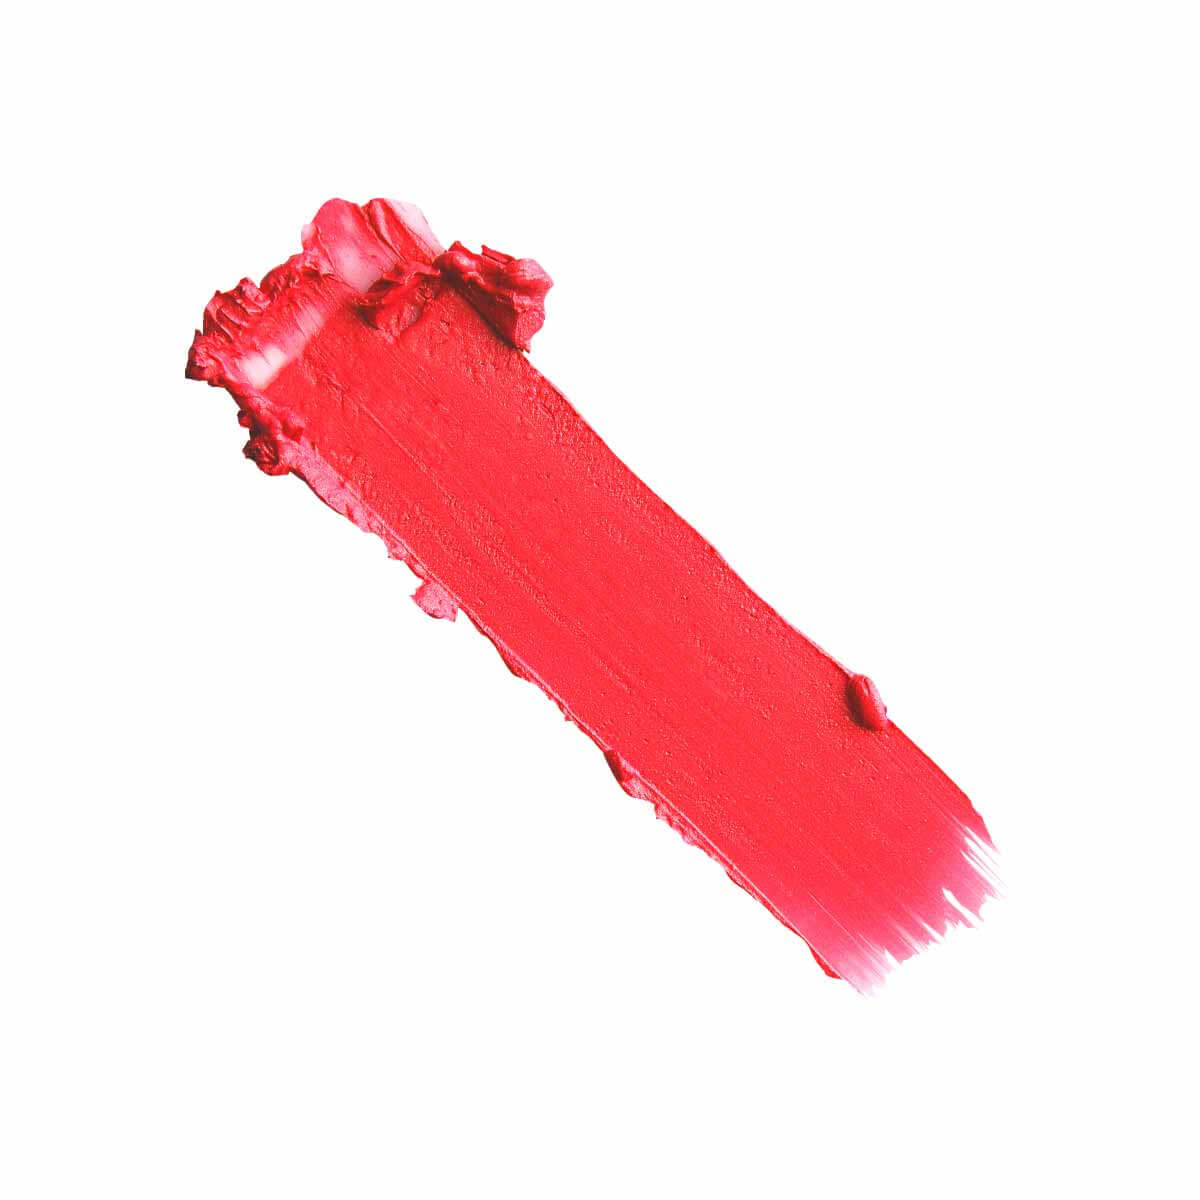 ModelCo Hailey Baldwin for ModelCo Perfect Pout Semi-Matte Lipstick 3.5g (Various Shades) - Betty B